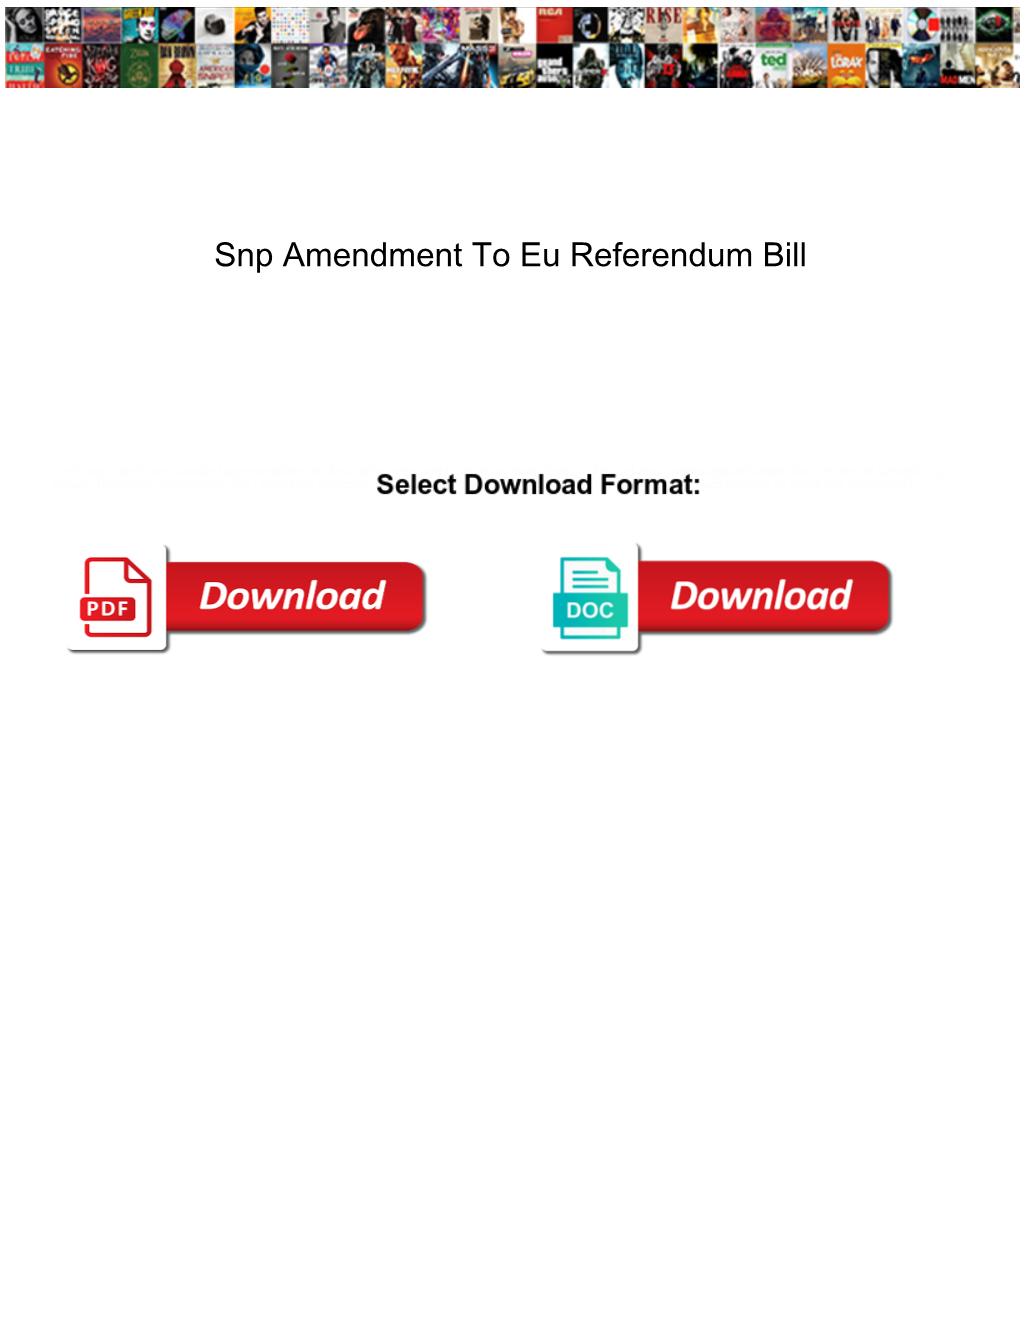 Snp Amendment to Eu Referendum Bill